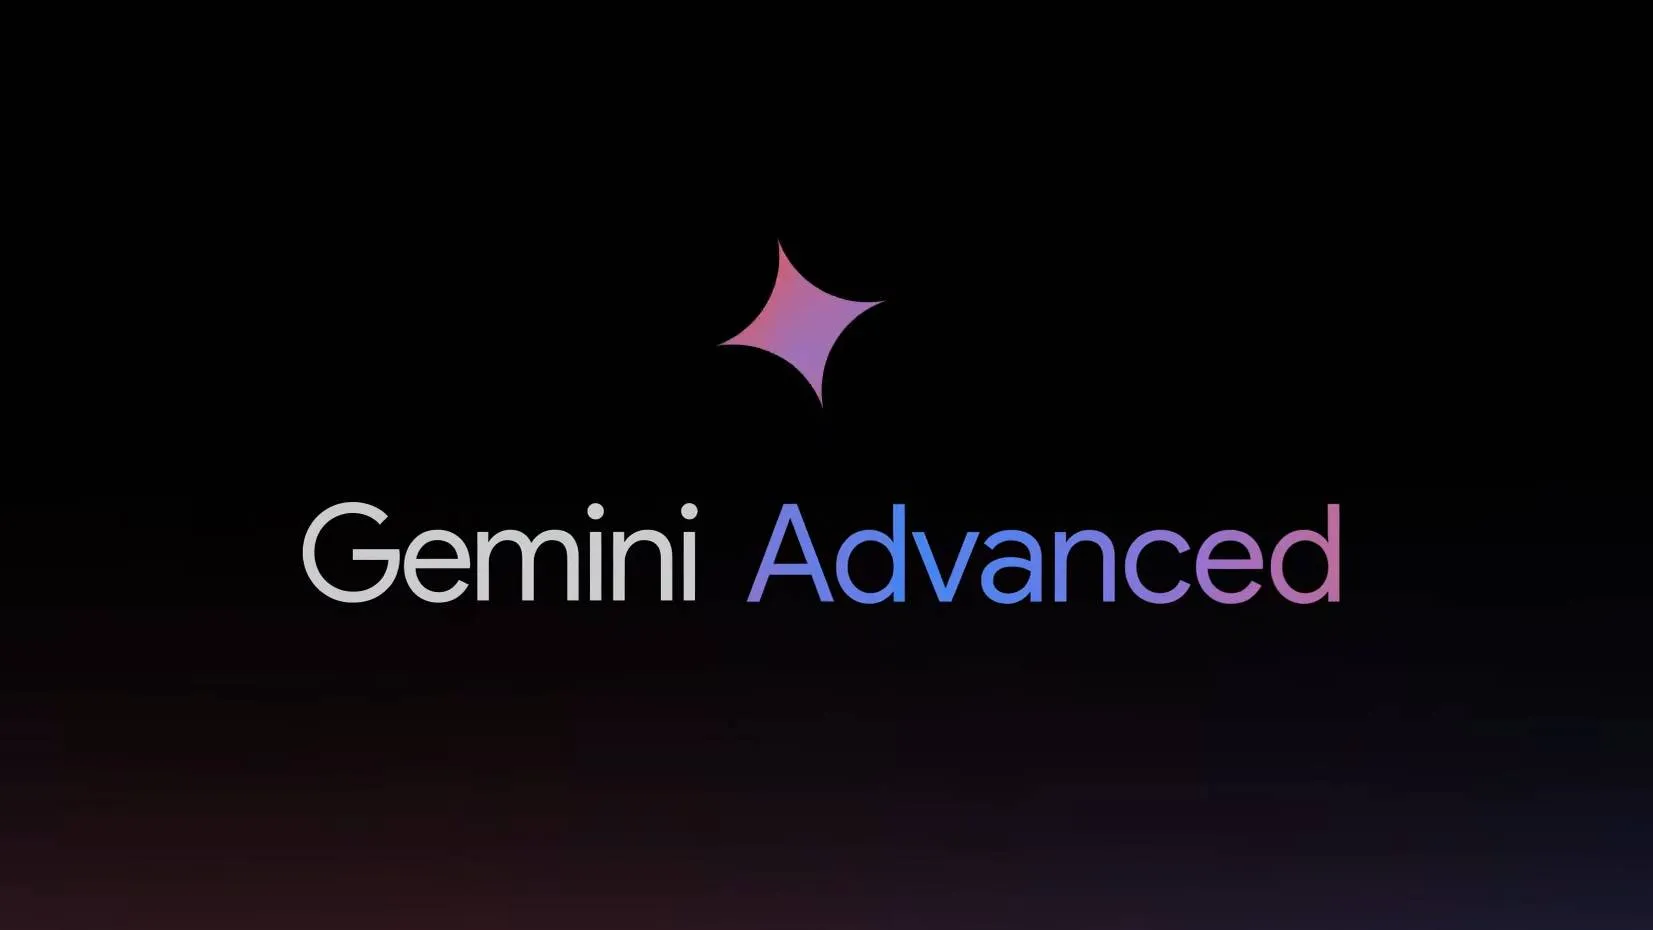 Gemini Advanced and Google